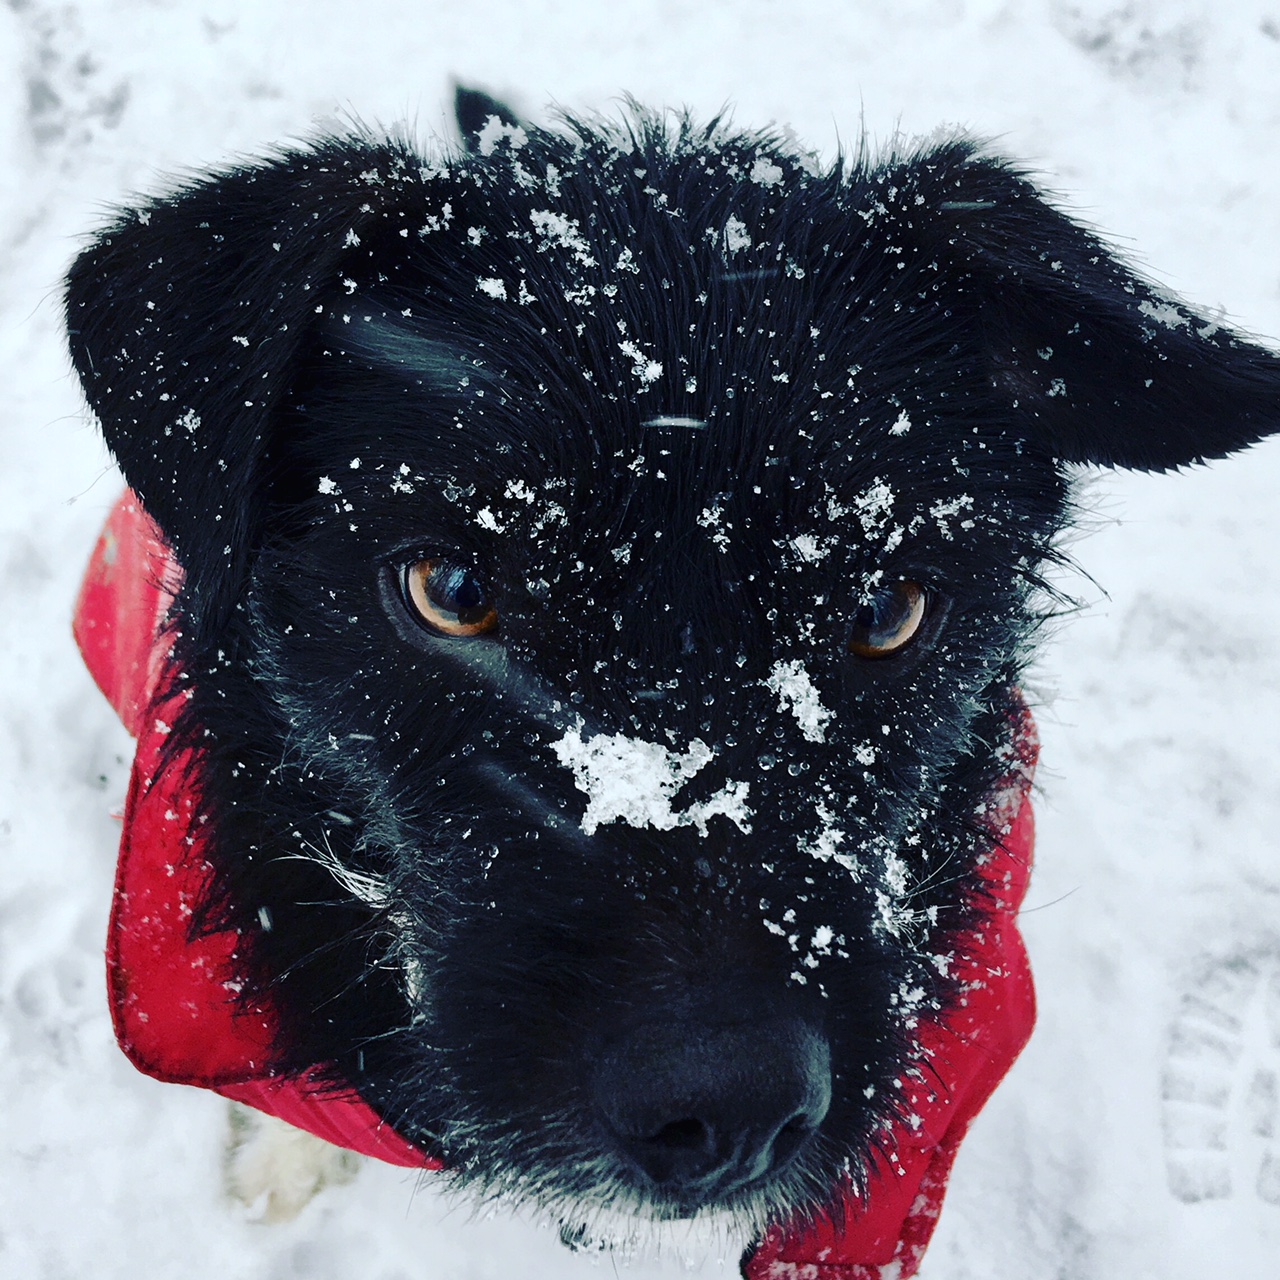 Snow Days & Dogs